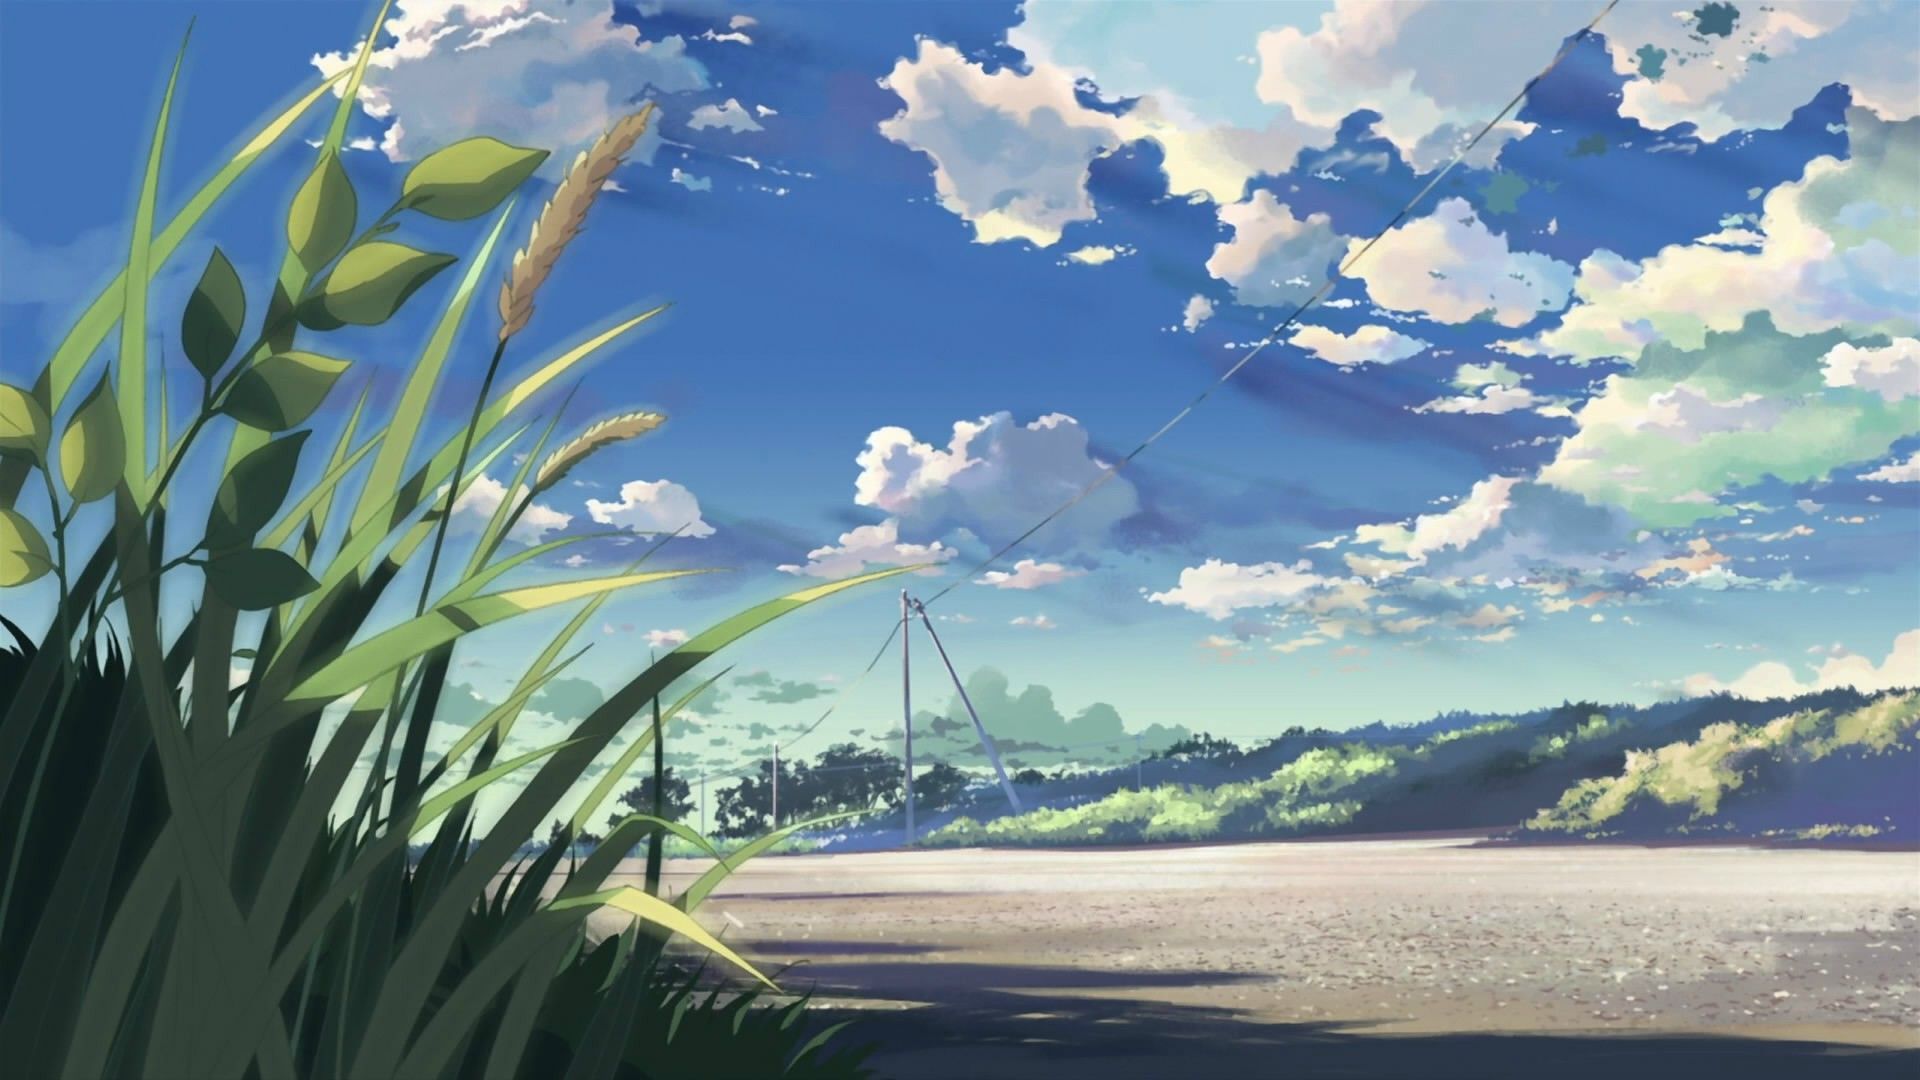 more discrete anime wallpaper!. Anime scenery wallpaper, Landscape wallpaper, Anime background wallpaper